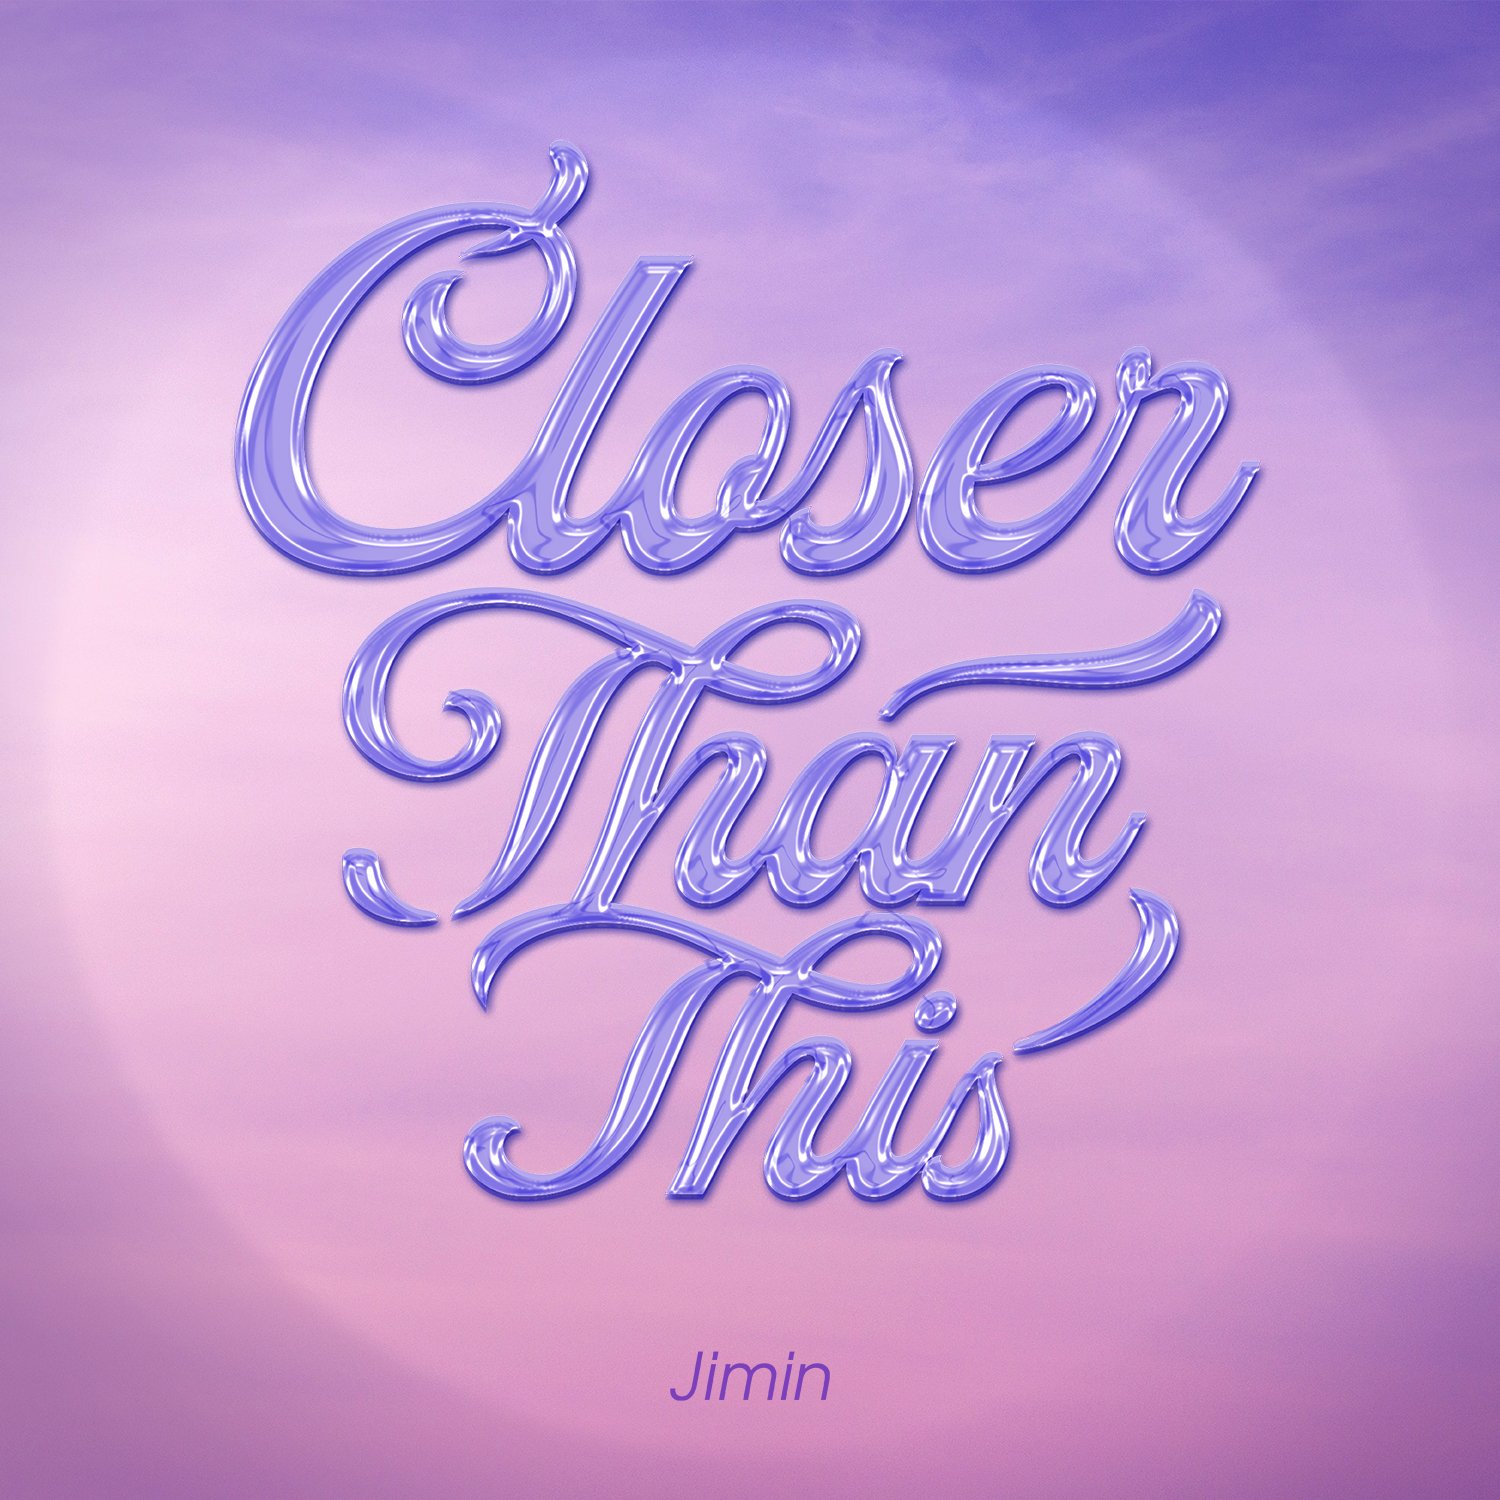 Jimin Lança Novo Single Digital “Closer Than This”